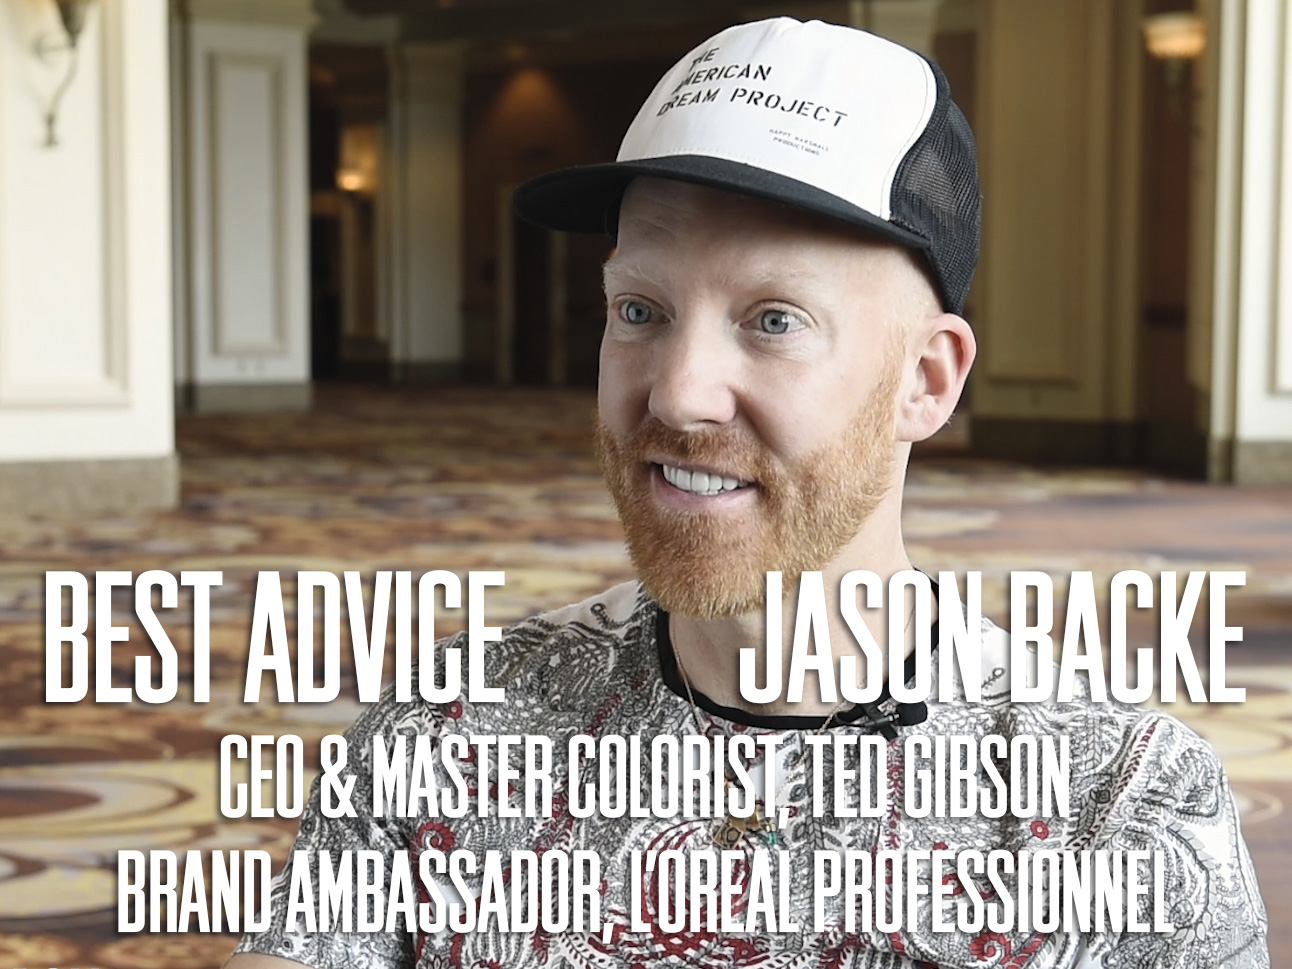 Best Advice Jason Backe